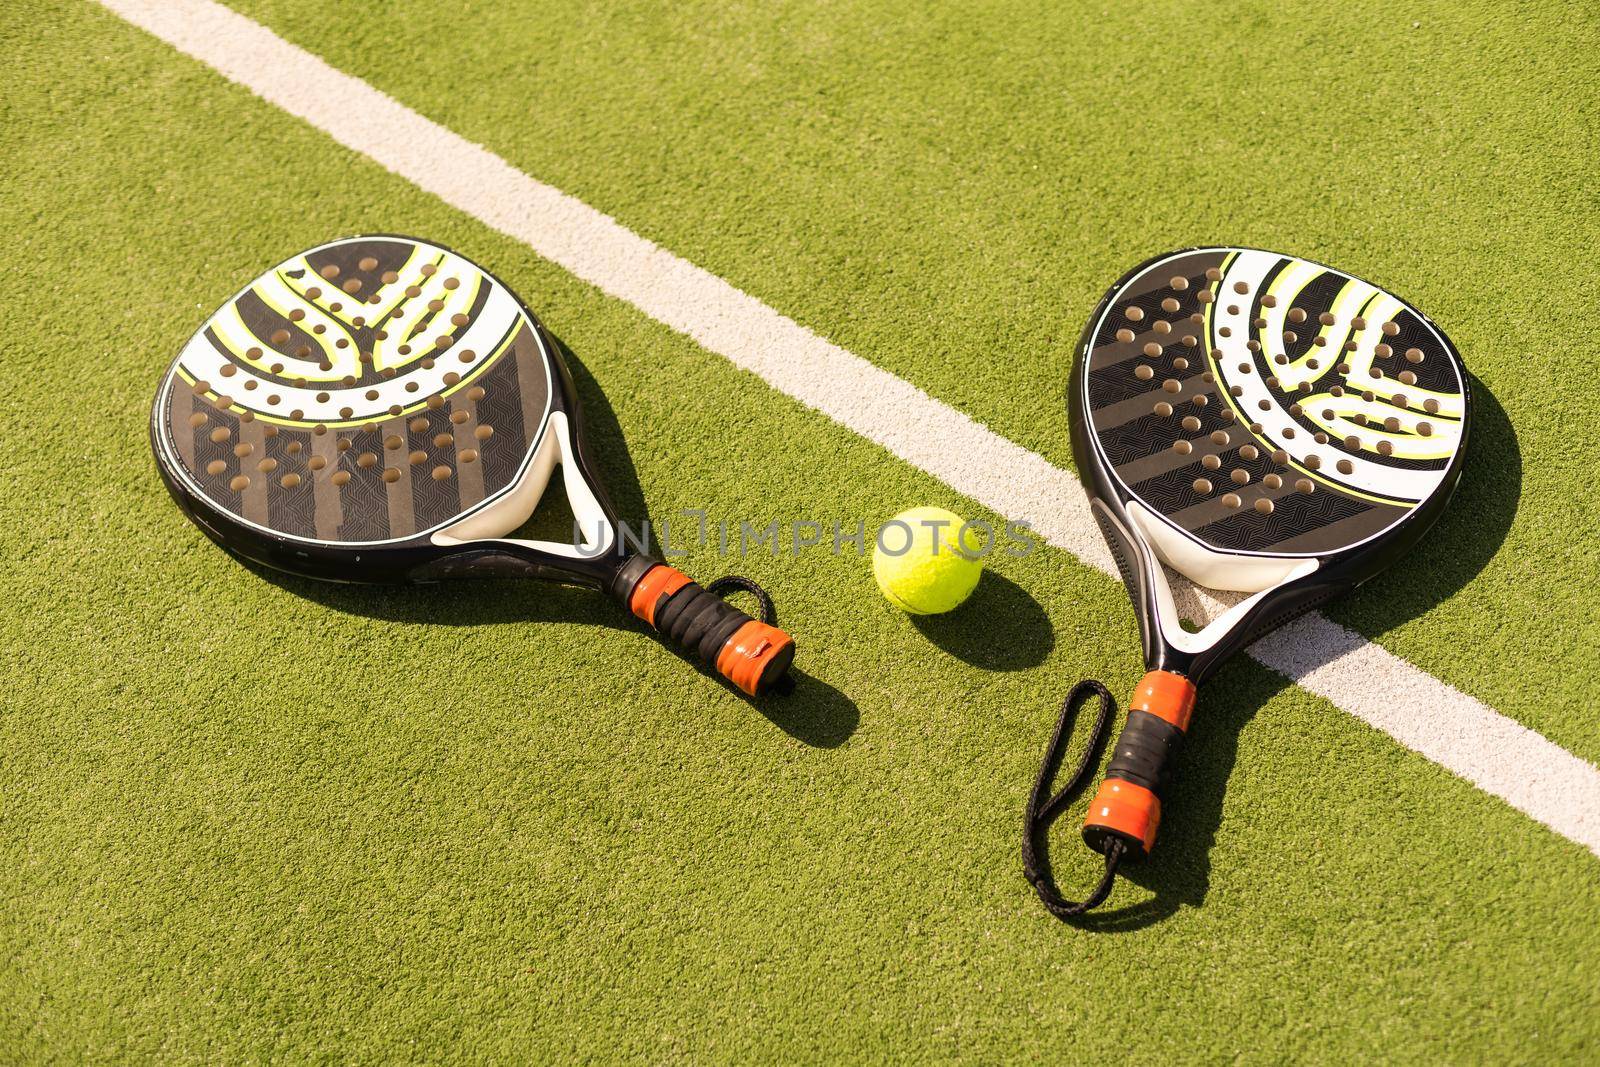 padel tennis racket sport court and balls